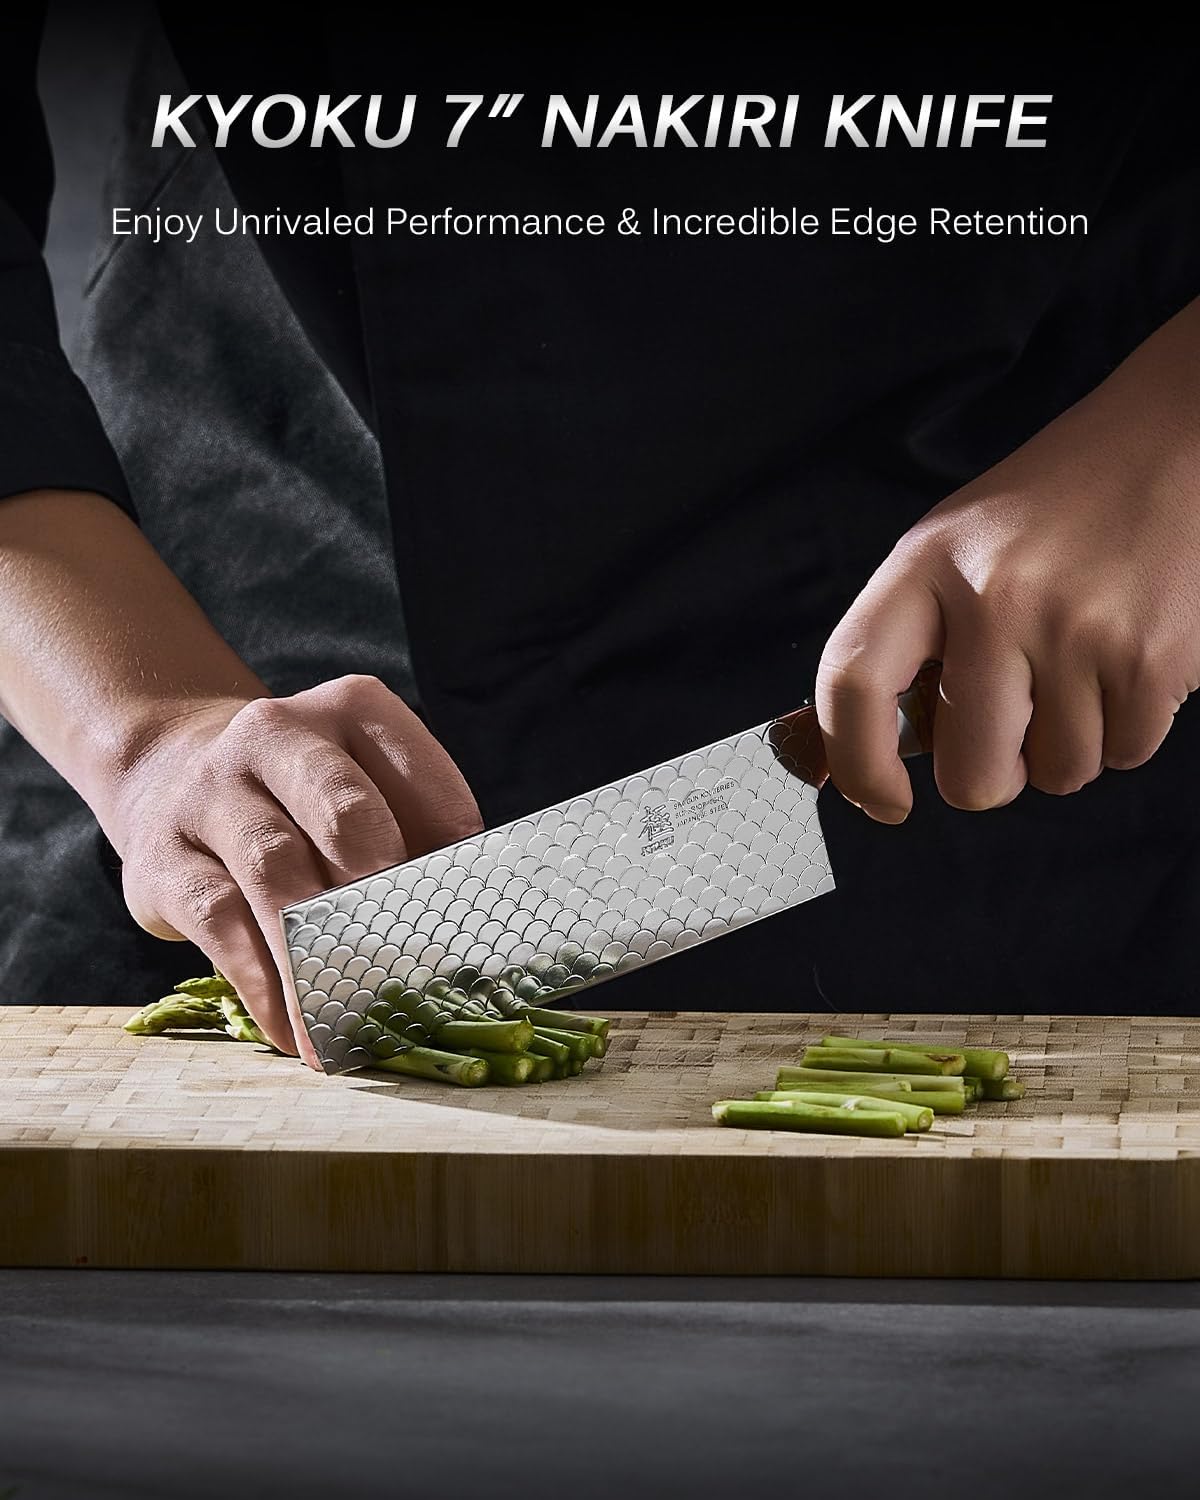 7" Nakiri Knife, Shogun Koi Series Vegetable Knife with Koi Scale Pattern, Japanese VG10 Stainless Steel Kitchen Knife with Sheath & Gift Box, Full Tang Professional Knife